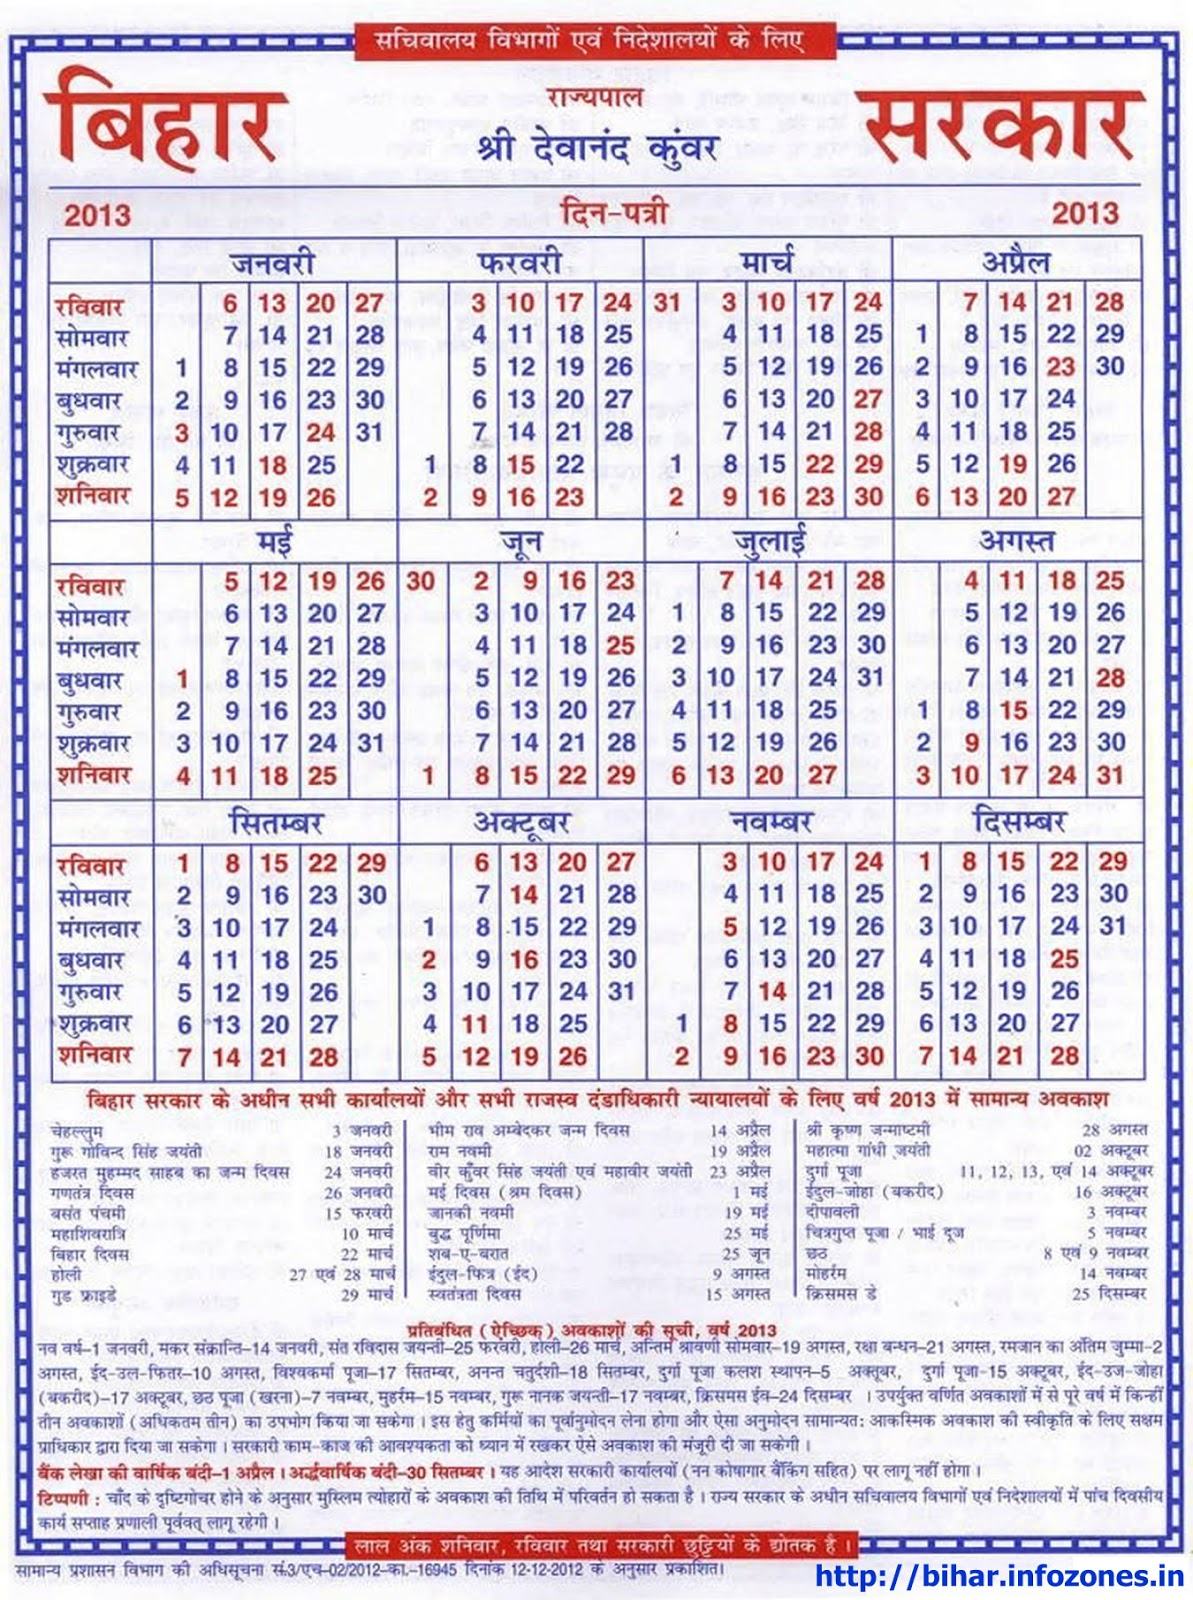 Bihar Government Calendar 2013 with regard to Bihar Govt Calendar